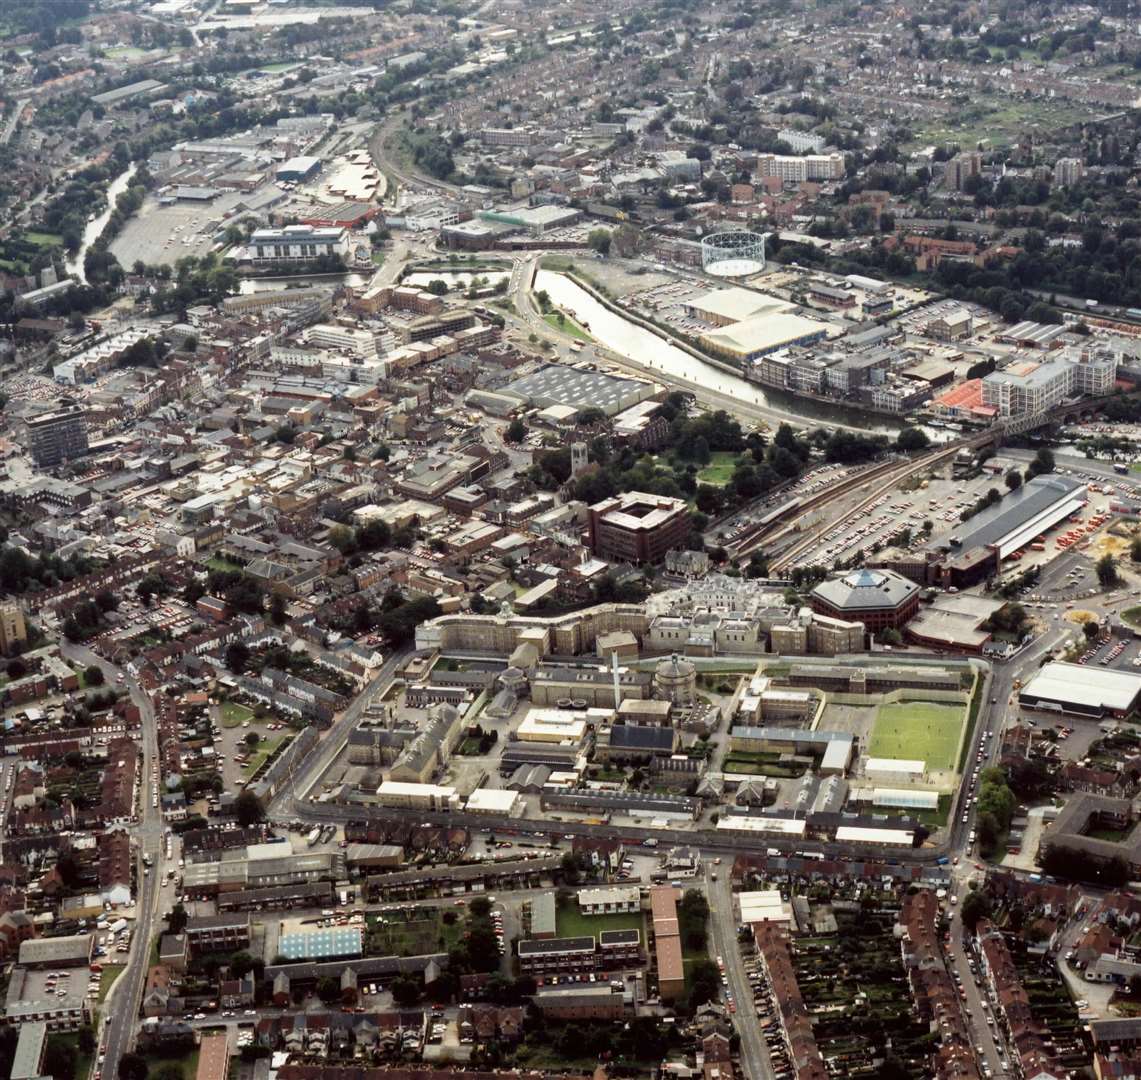 Maidstone town centre, 1995